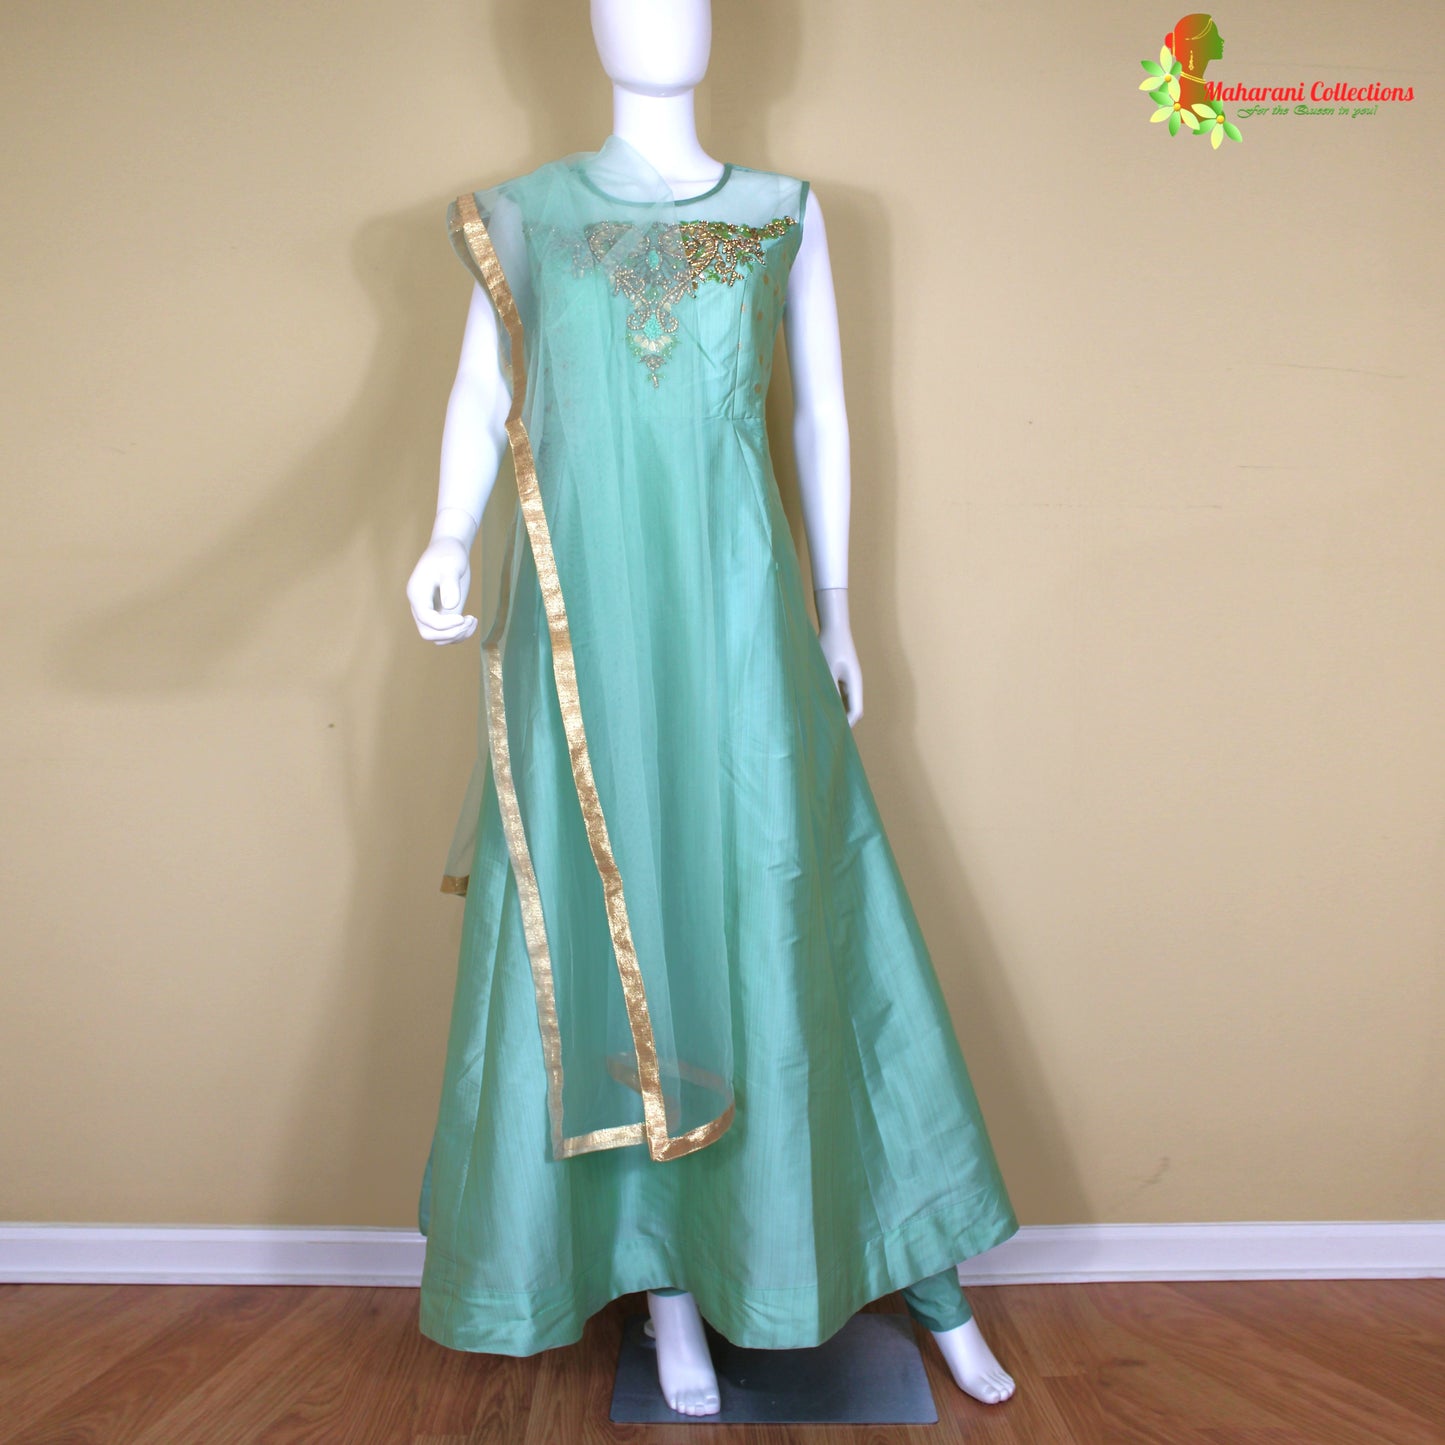 Maharani's Designer Gown (Anarkali Suit) - Pista Green (L) - Tussar Silk